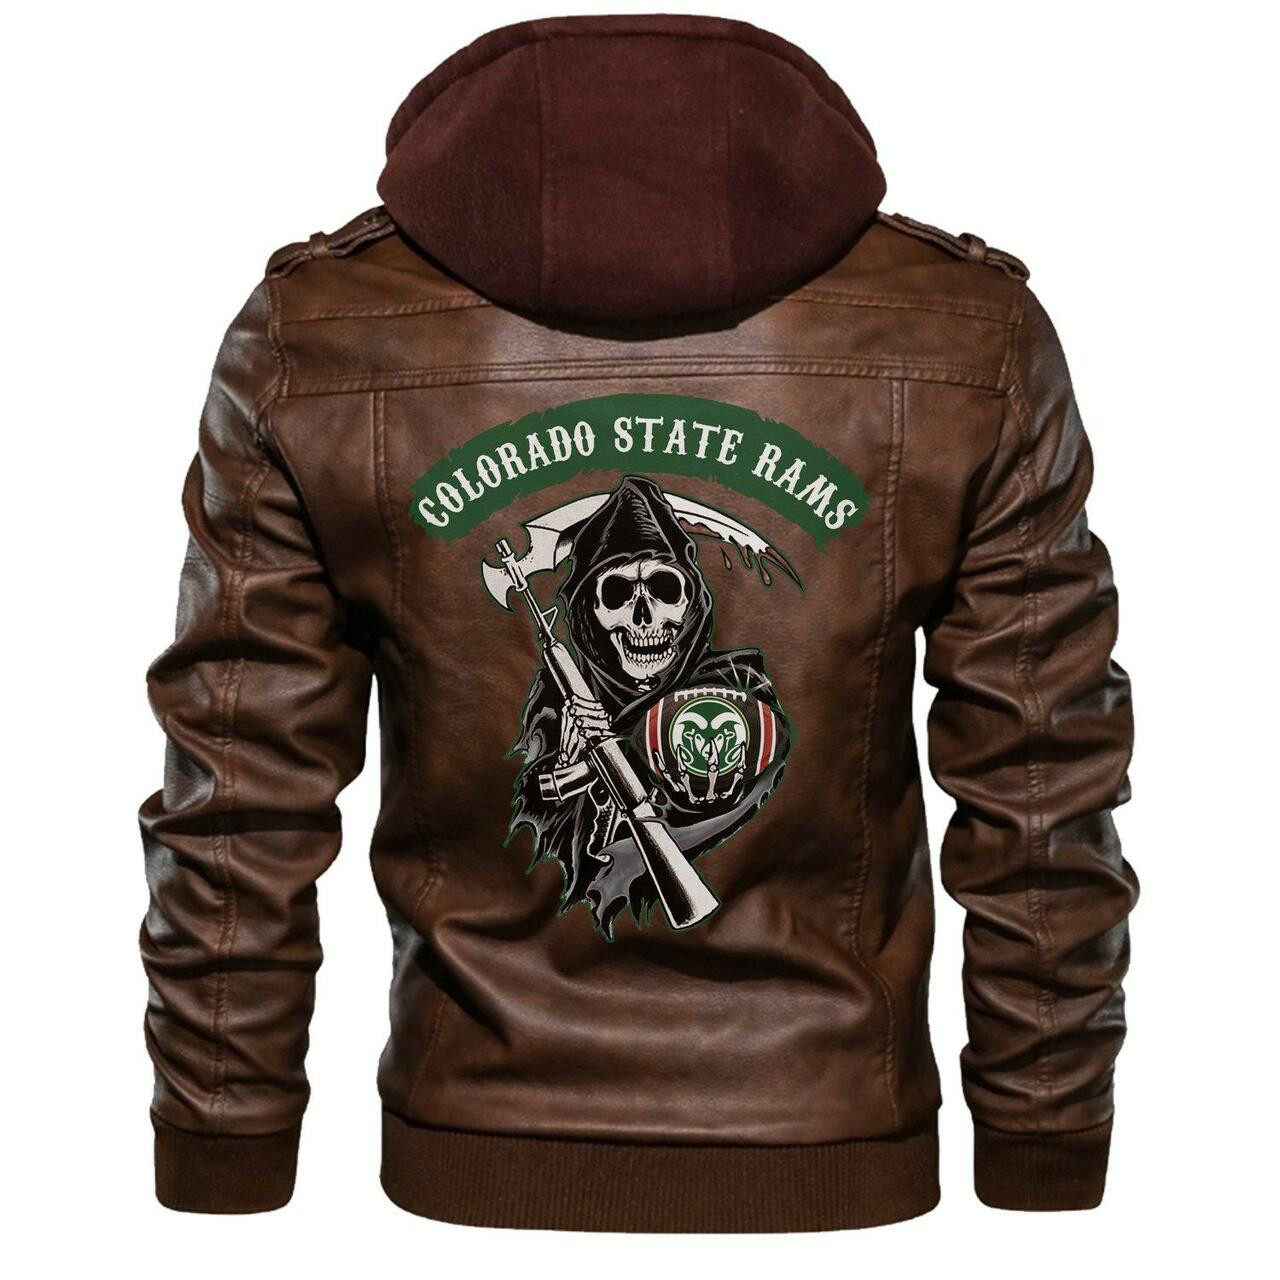 Top leather jacket Sells Best on Techcomshop 2